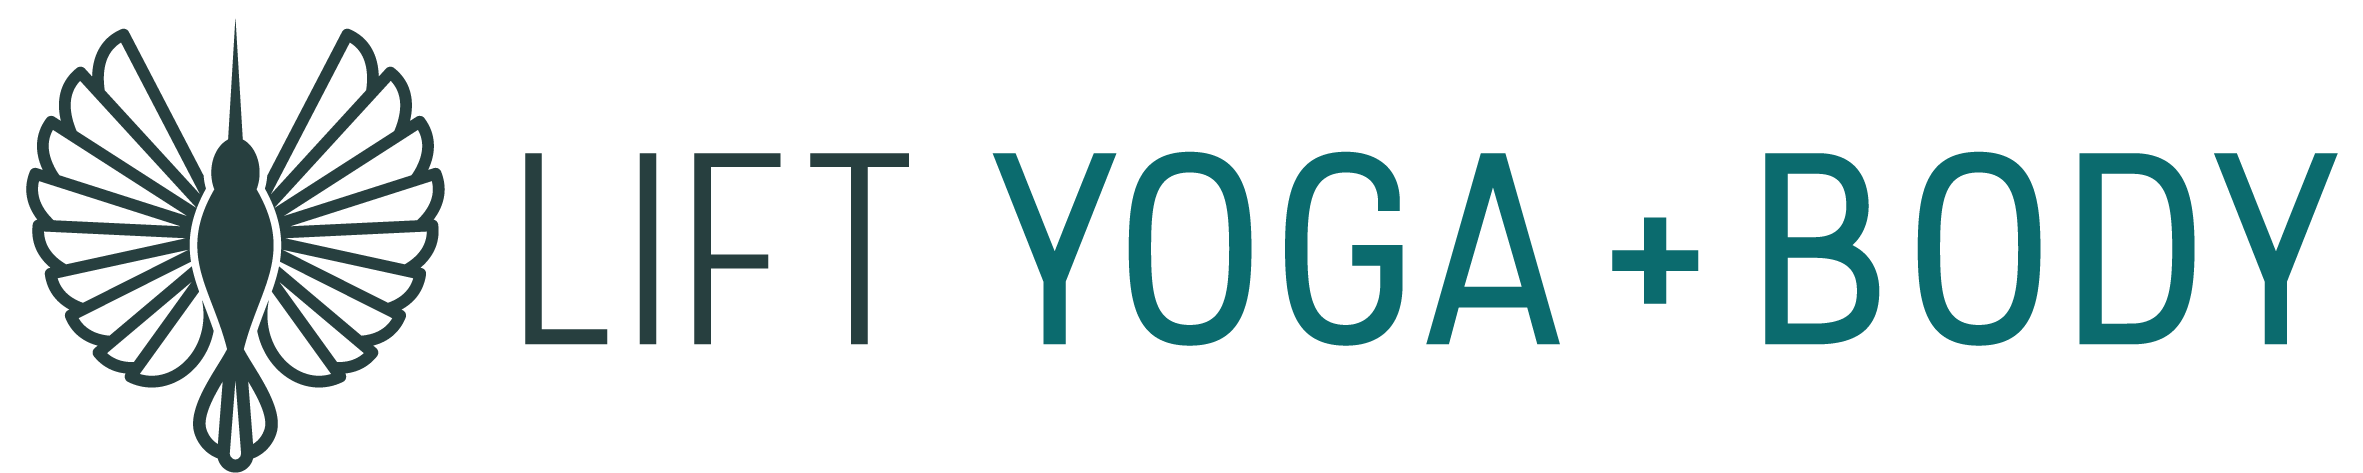 Lift Yoga + Body Main Logo